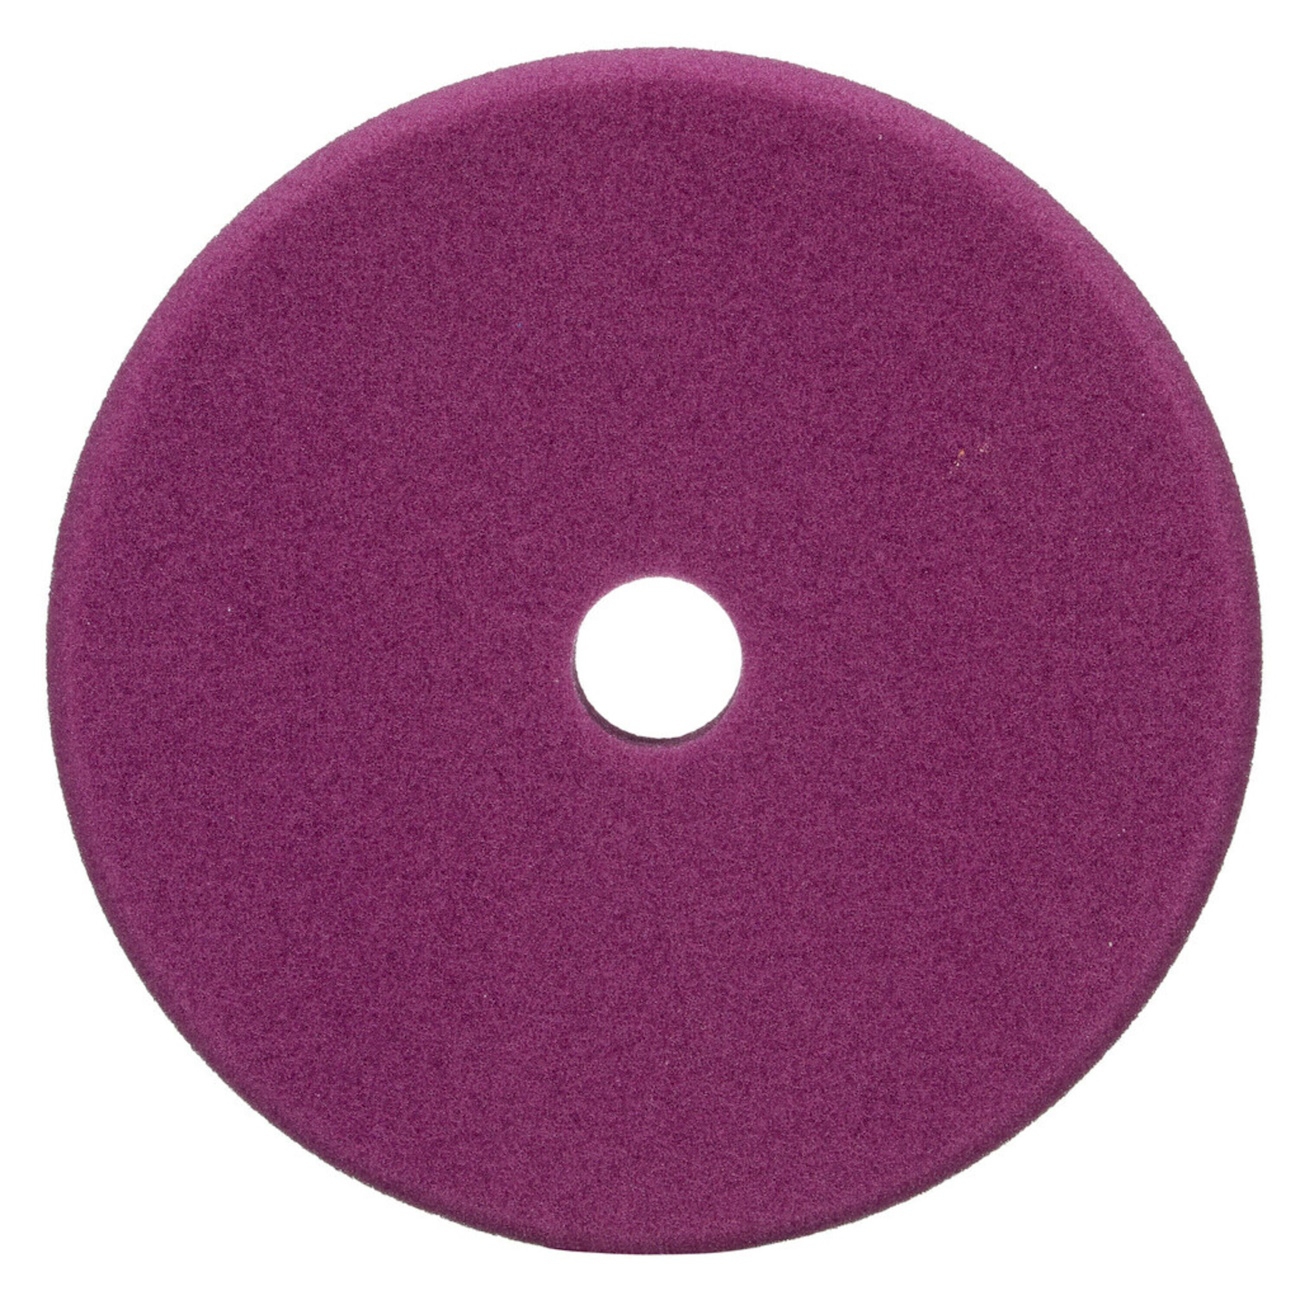 3M Perfect-it almohadilla pulidora de espuma fina para pulidora excéntrica, violeta, 150 mm, 34127 (Pack=2 piezas)